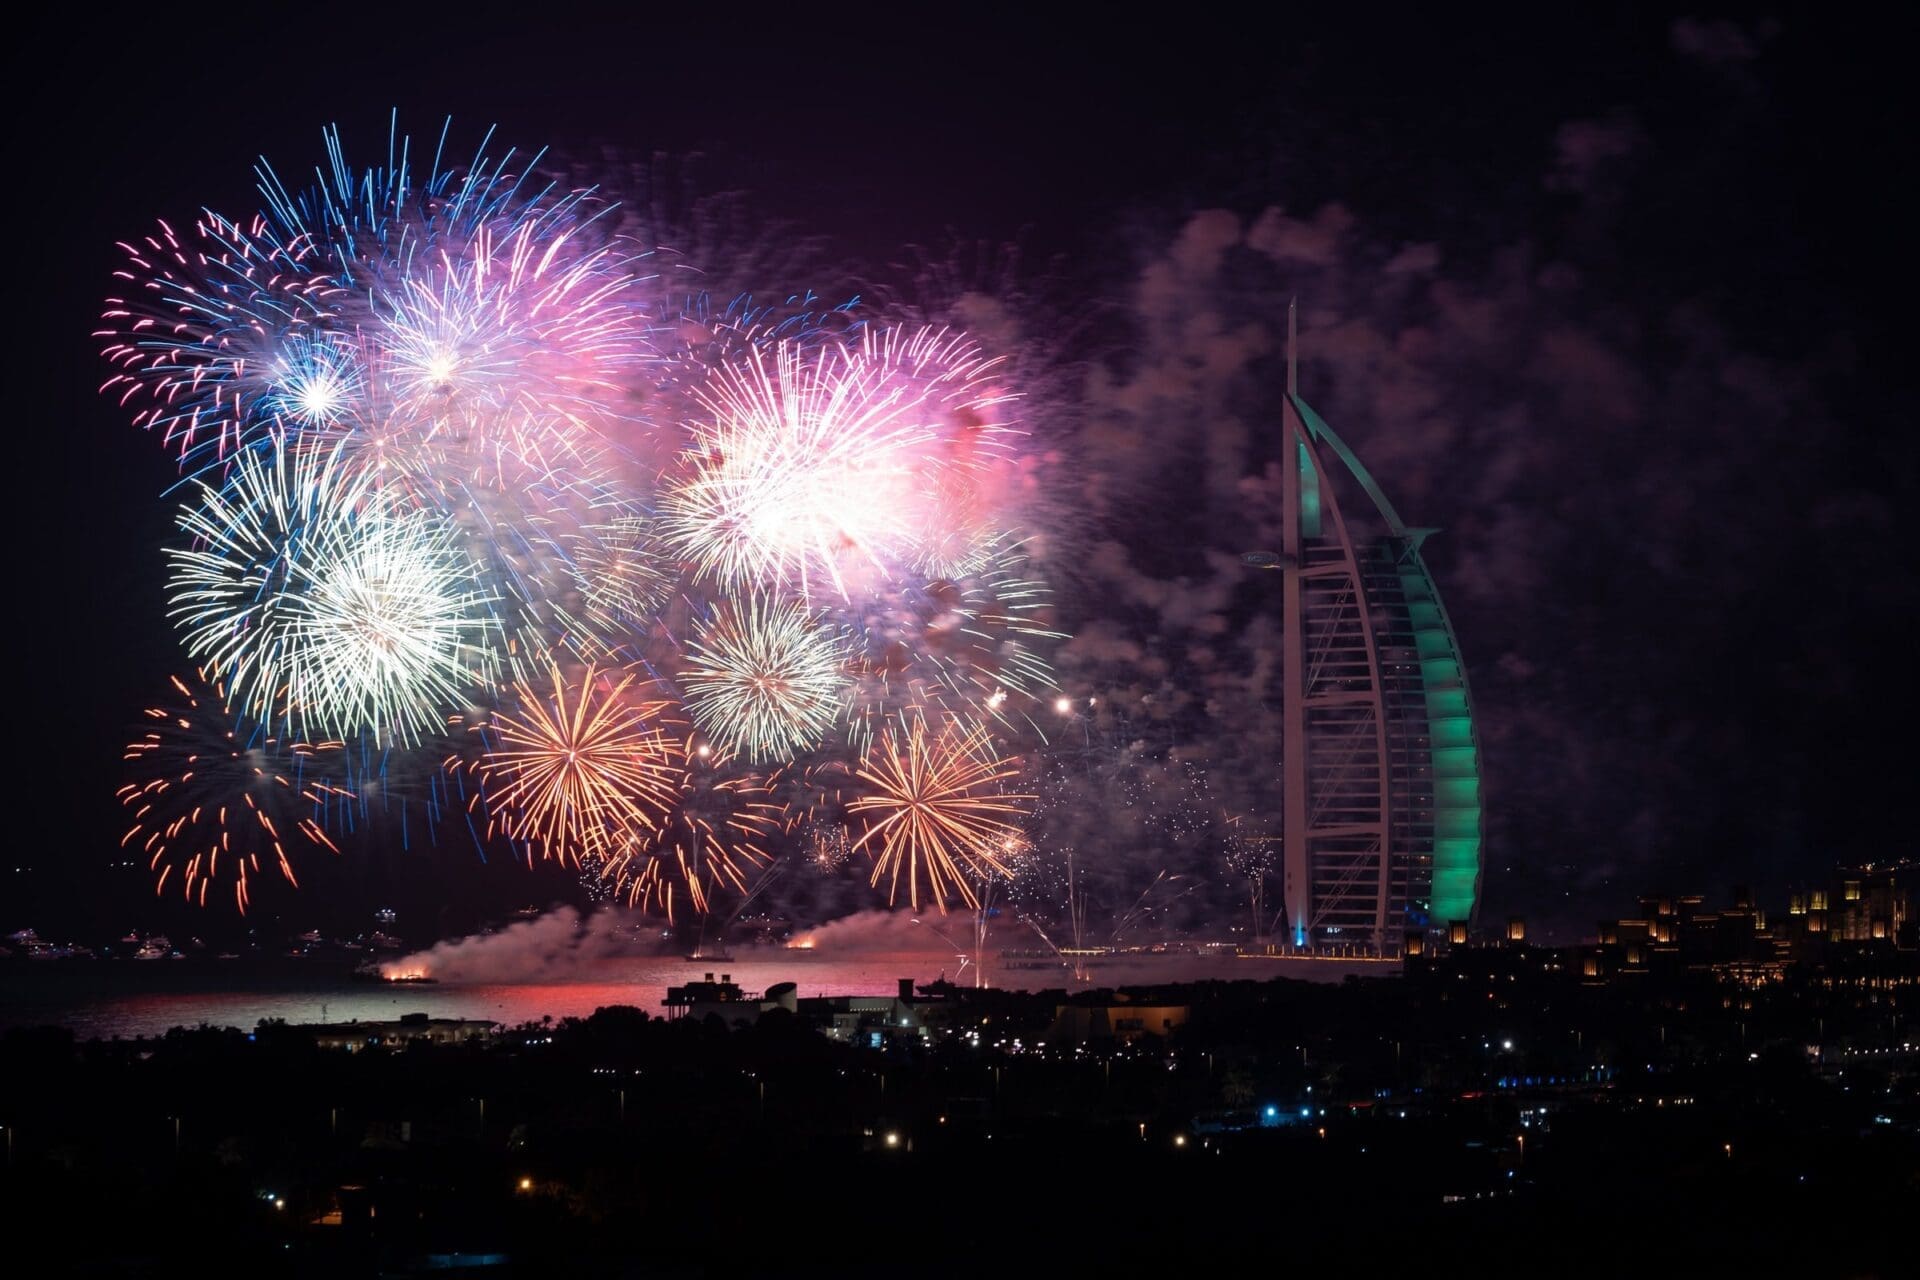 CELEBRATE NEW YEAR'S EVE ON A YACHT NEAR THE BURJ AL ARAB IN DUBAI